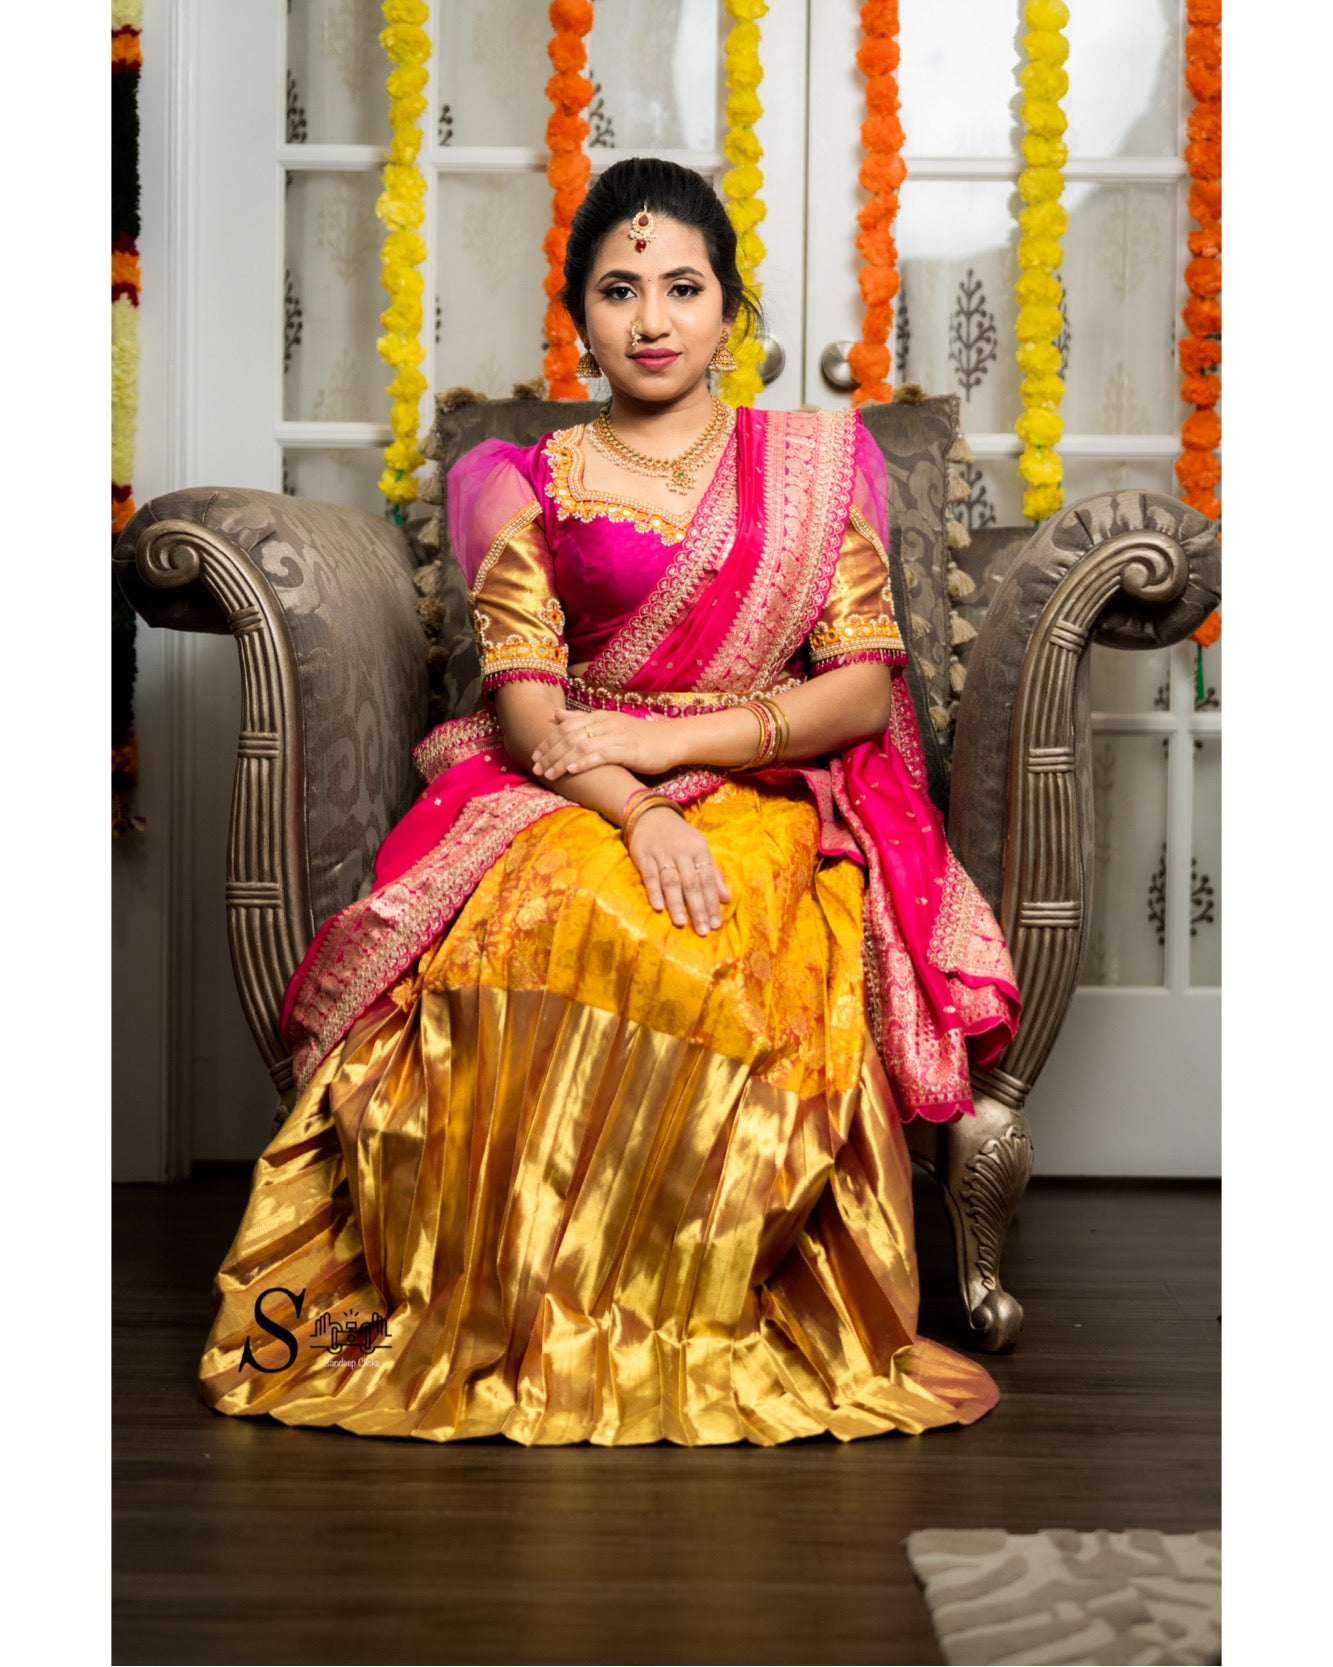 Beautiful Premium Pure Kanchi Pattu Lehenga/ half saree for half sare function/ wedding occasion. Fits size 34 to 38